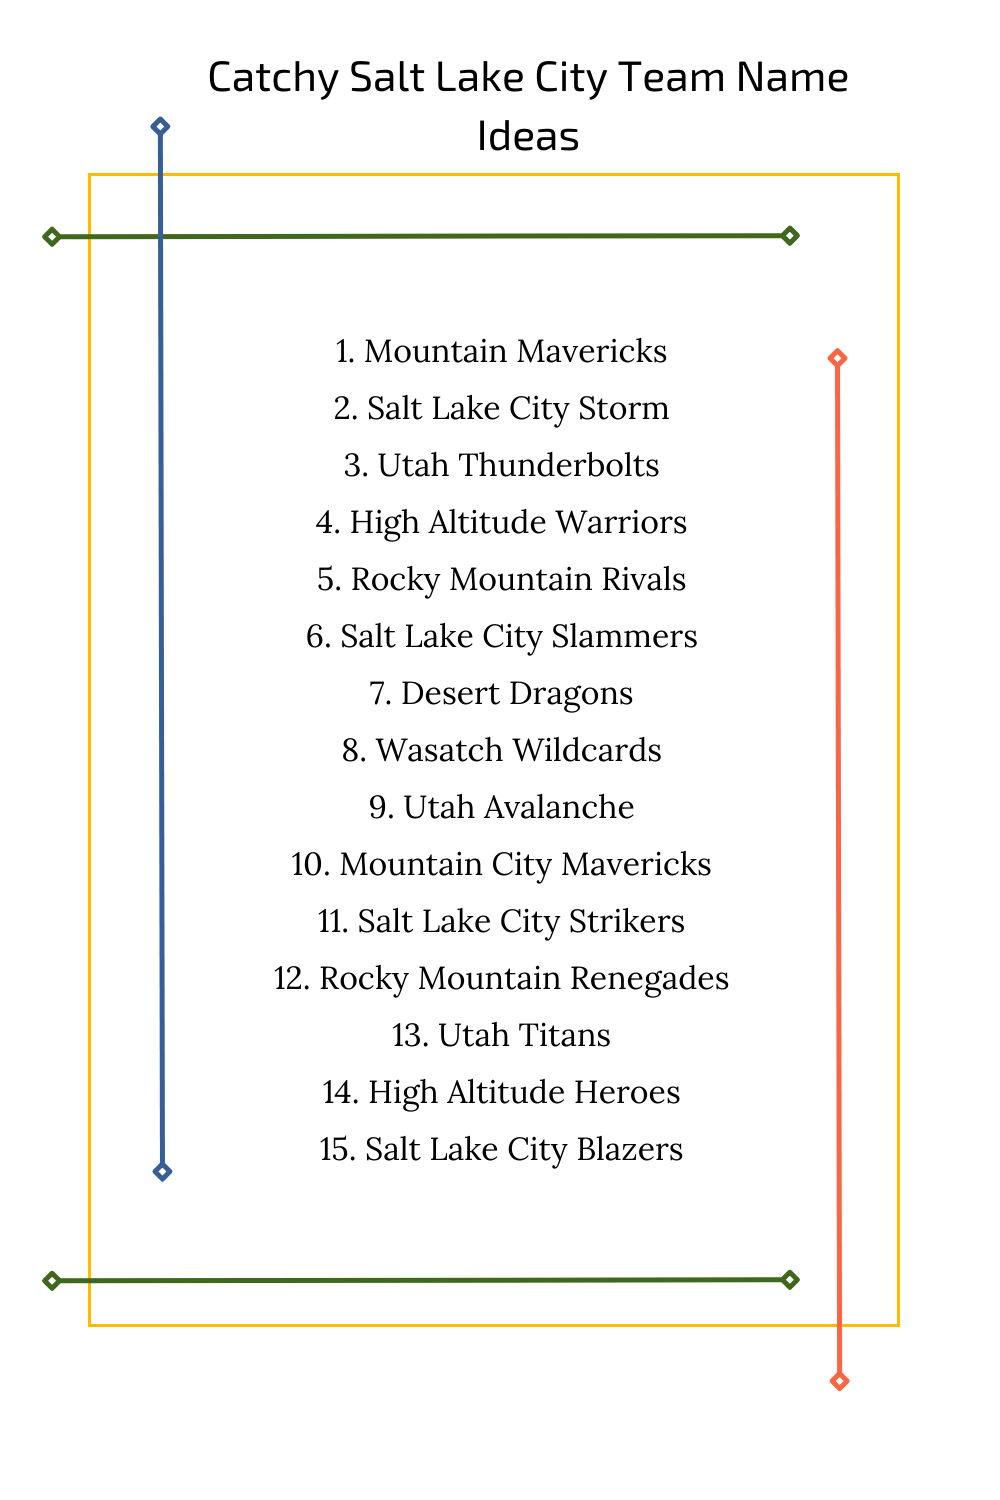 Catchy Salt Lake City Team Name Ideas